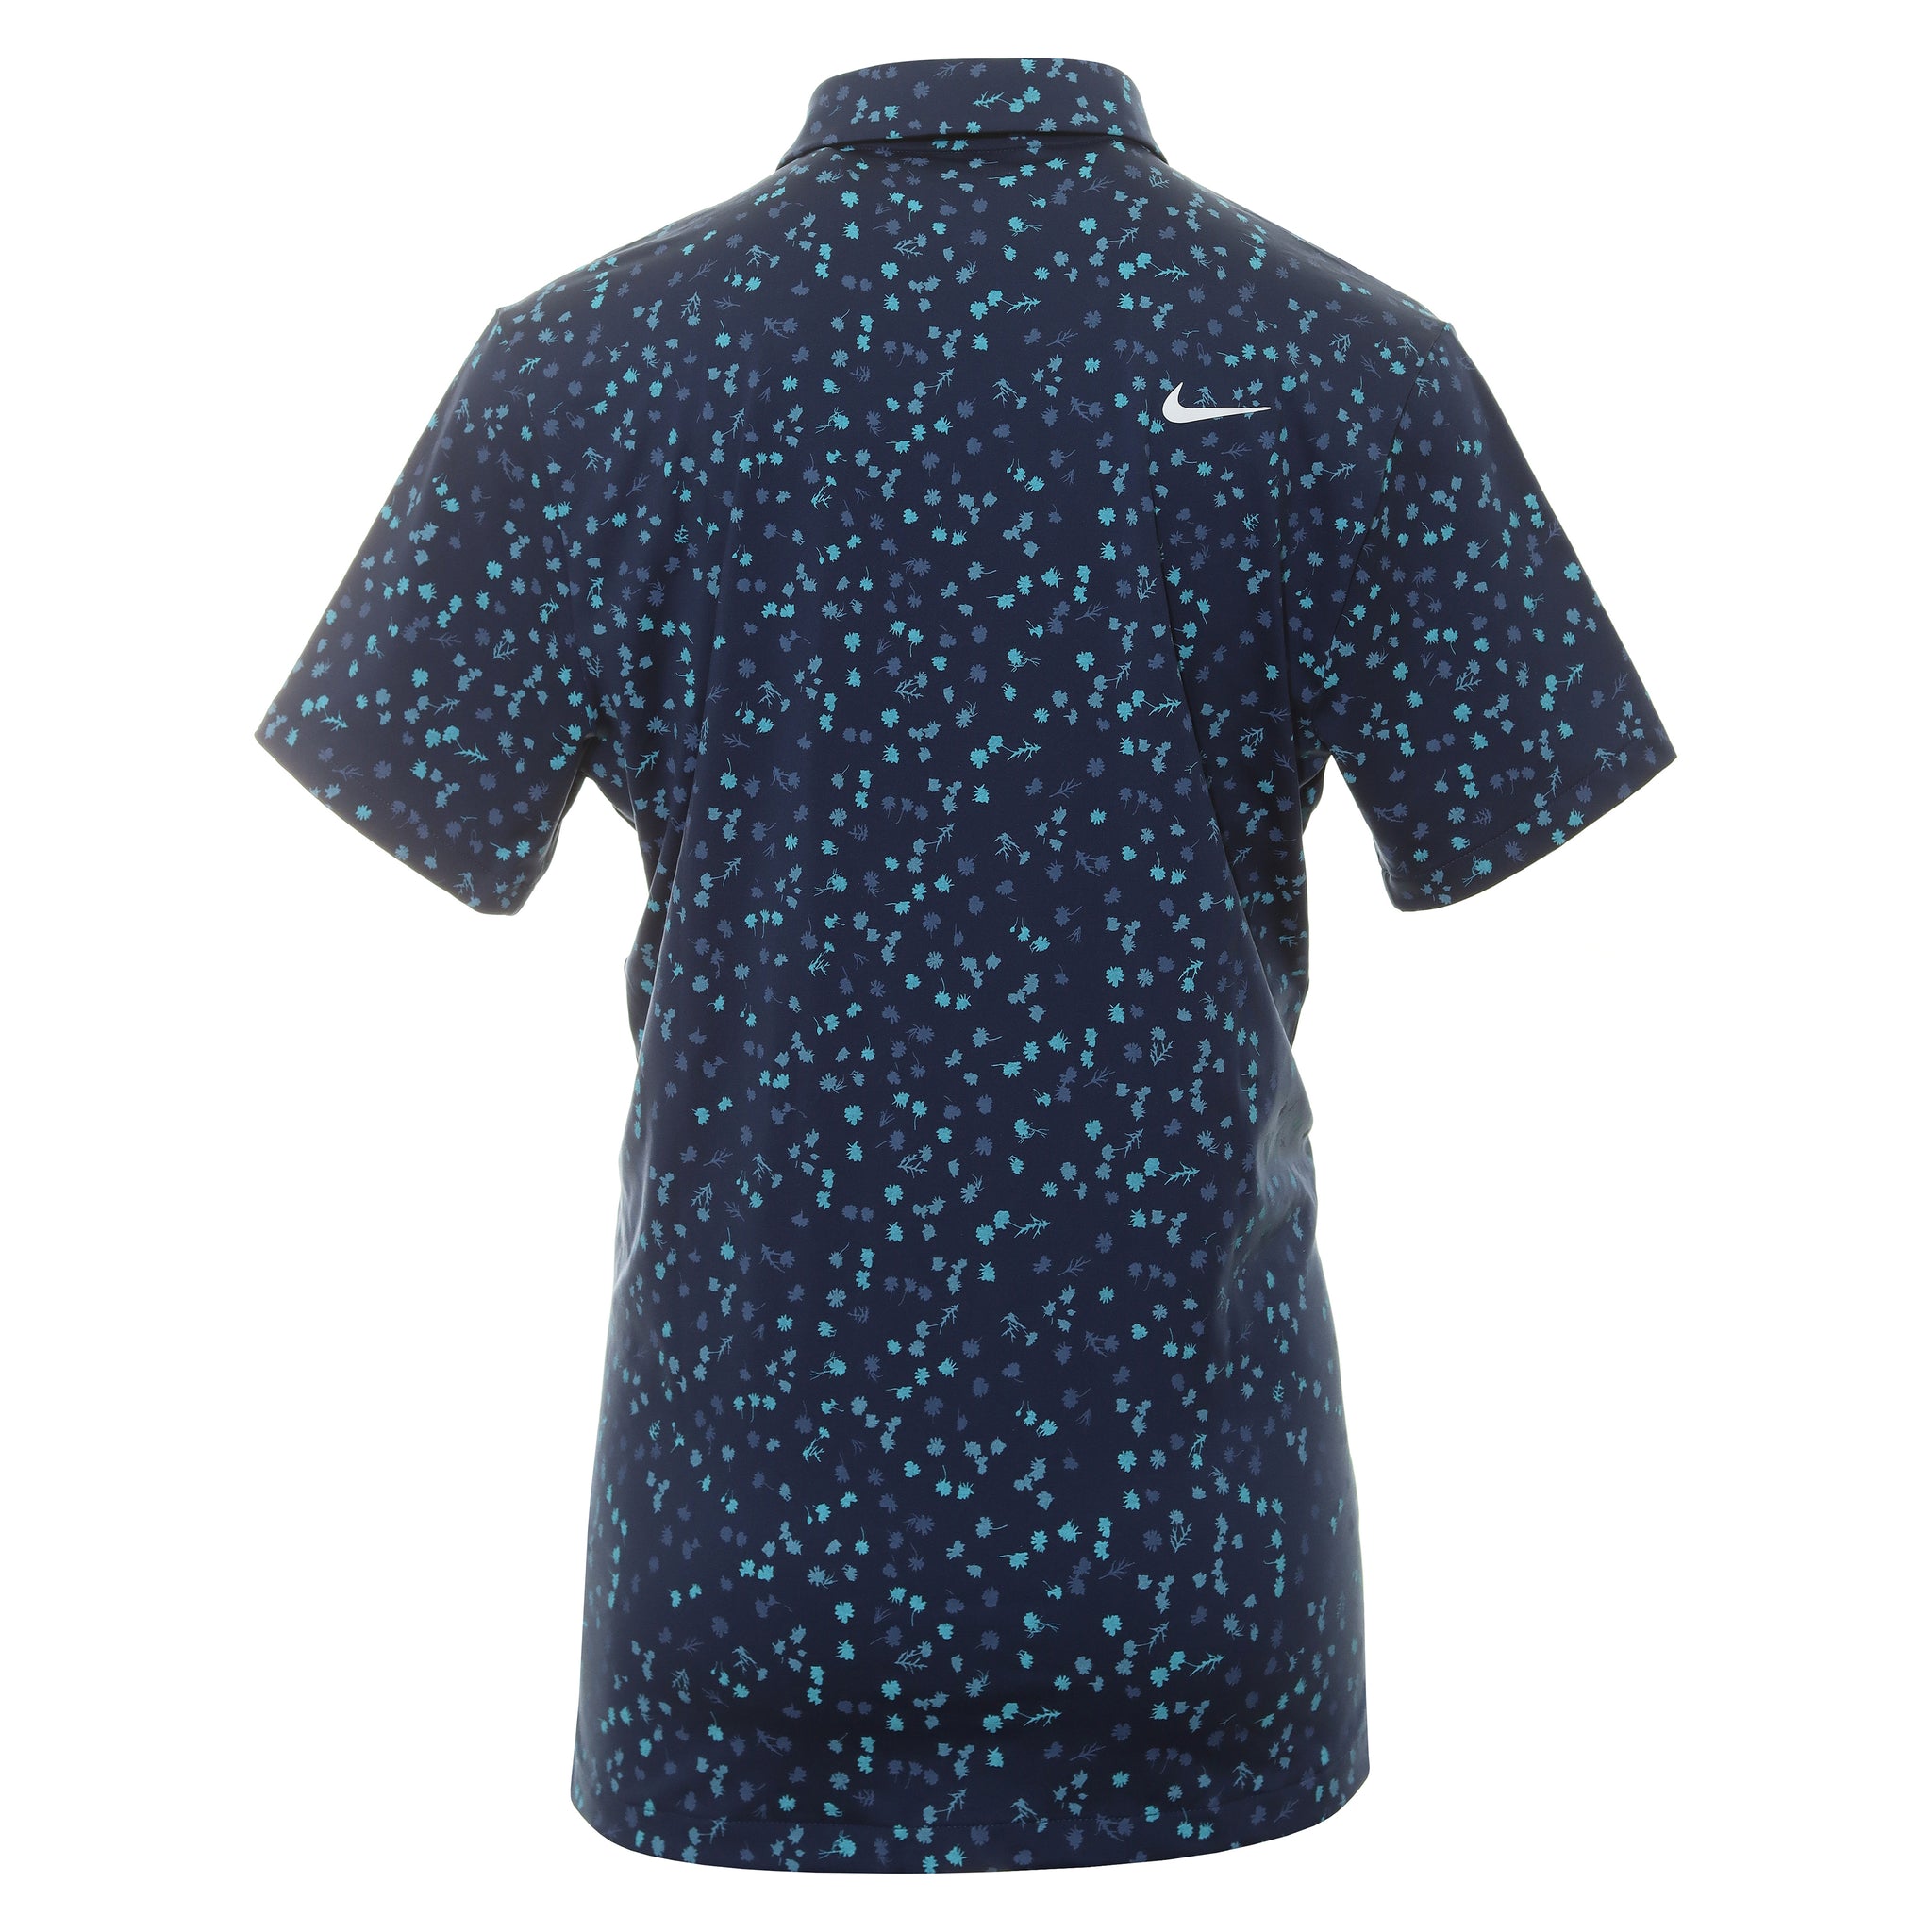 nike-golf-dri-fit-tour-micro-floral-shirt-dx6089-midnight-navy-410